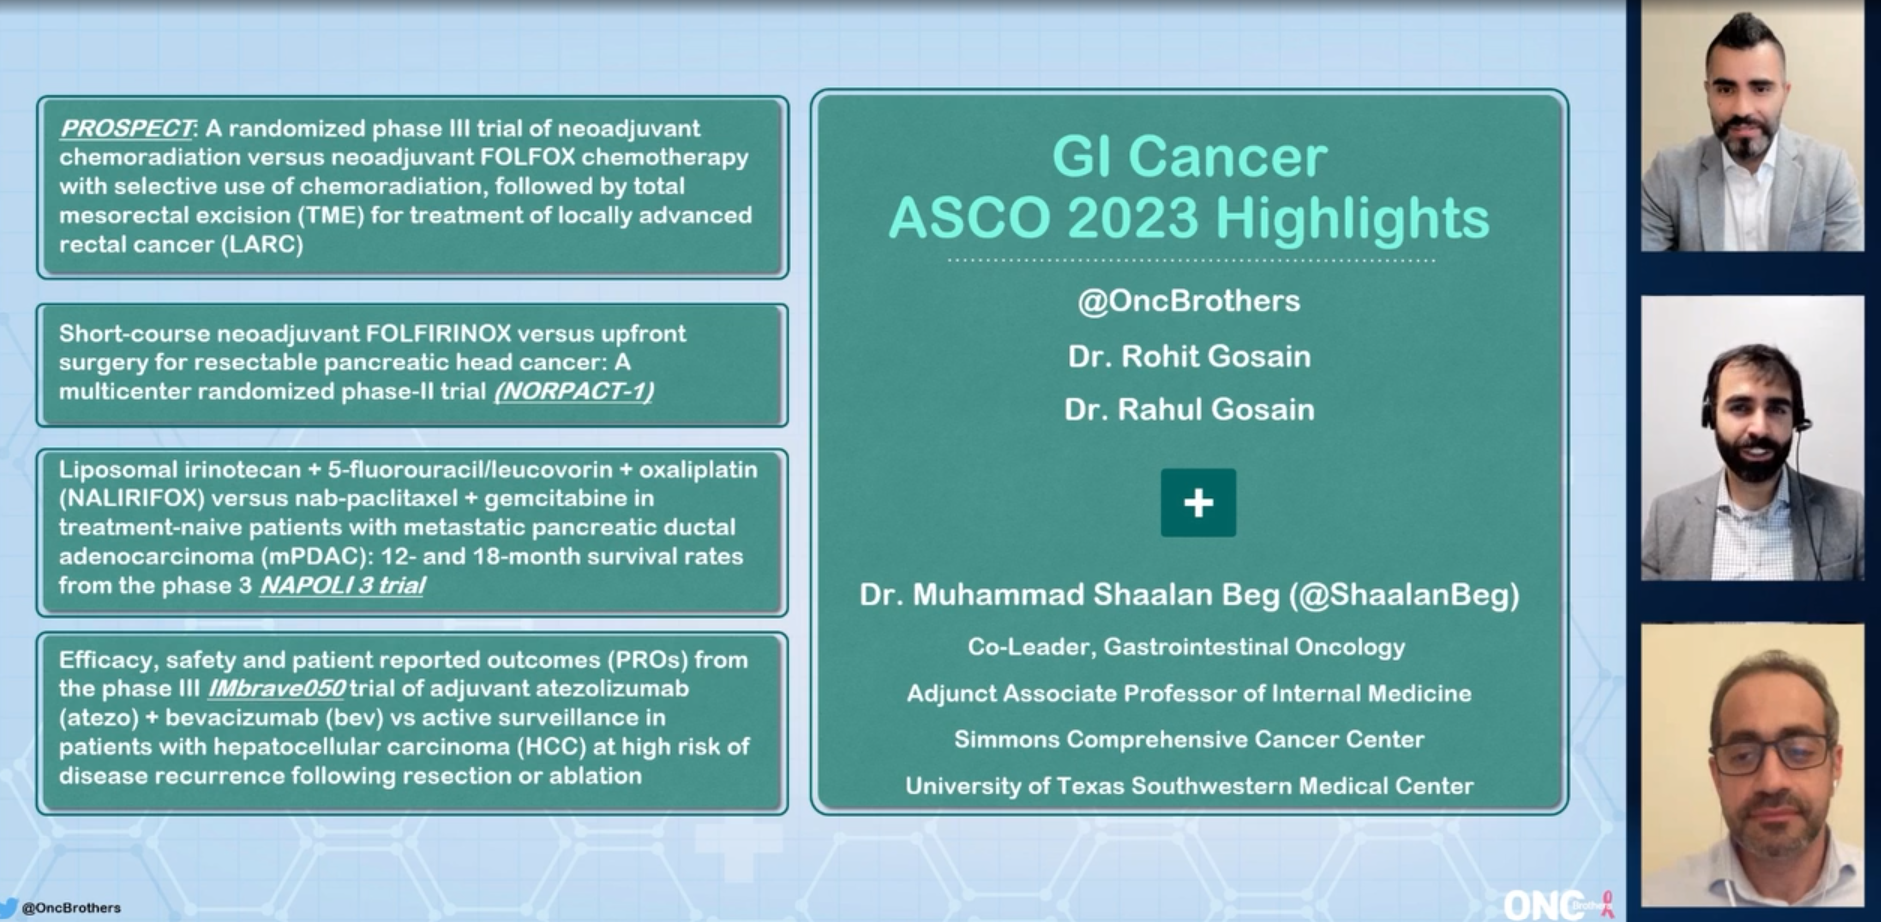 GI Cancer ASCO 2023 Highlights